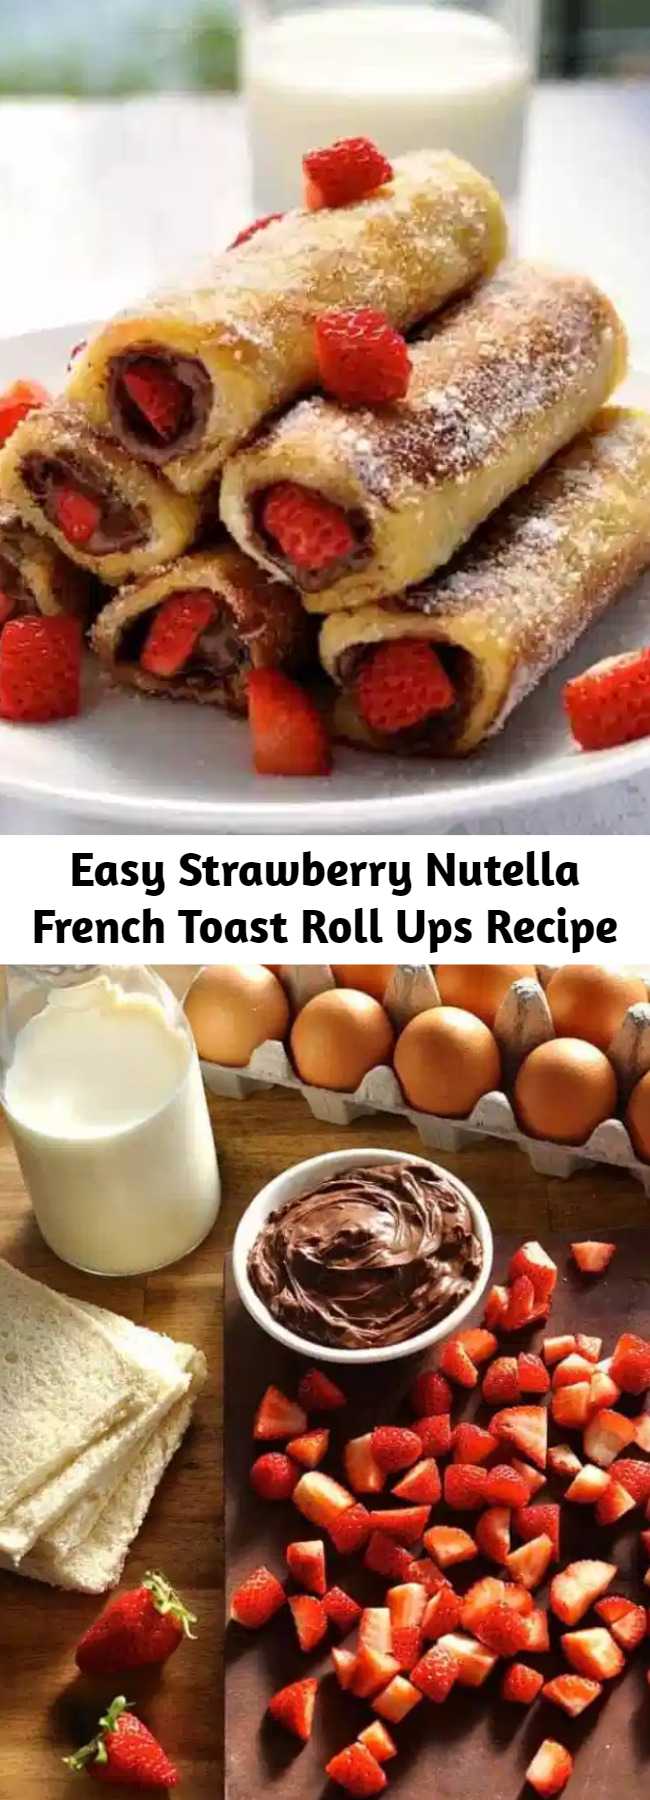 Easy Strawberry Nutella French Toast Roll Ups Recipe - These french toast roll ups taste like an awesome doughnut!